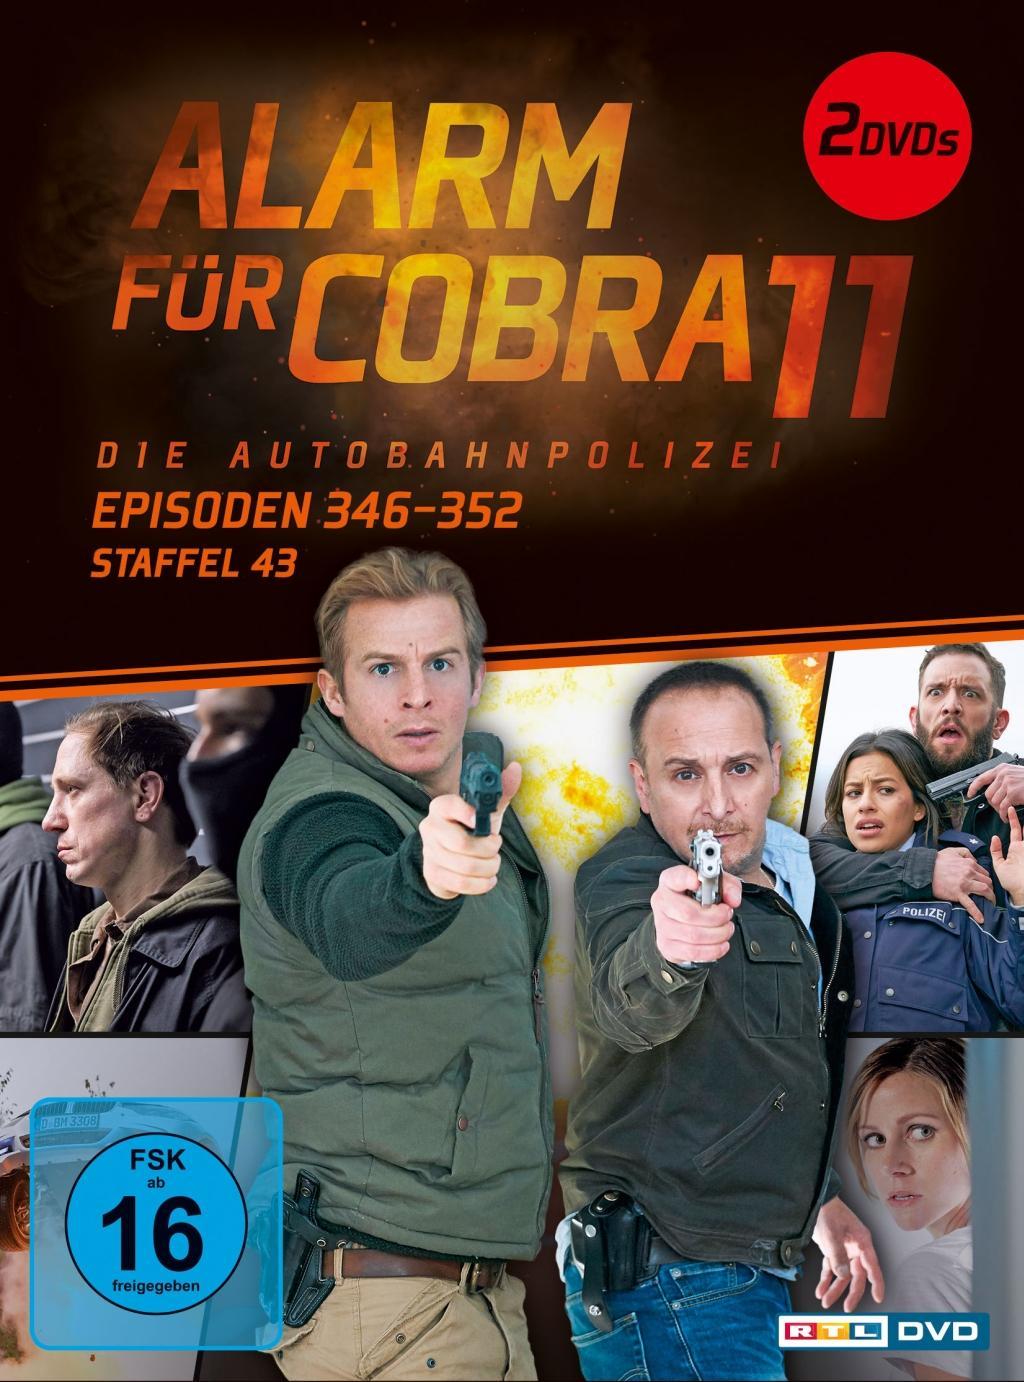 Videoclip Alarm für Cobra 11 - Staffel 43 Hermann Joha